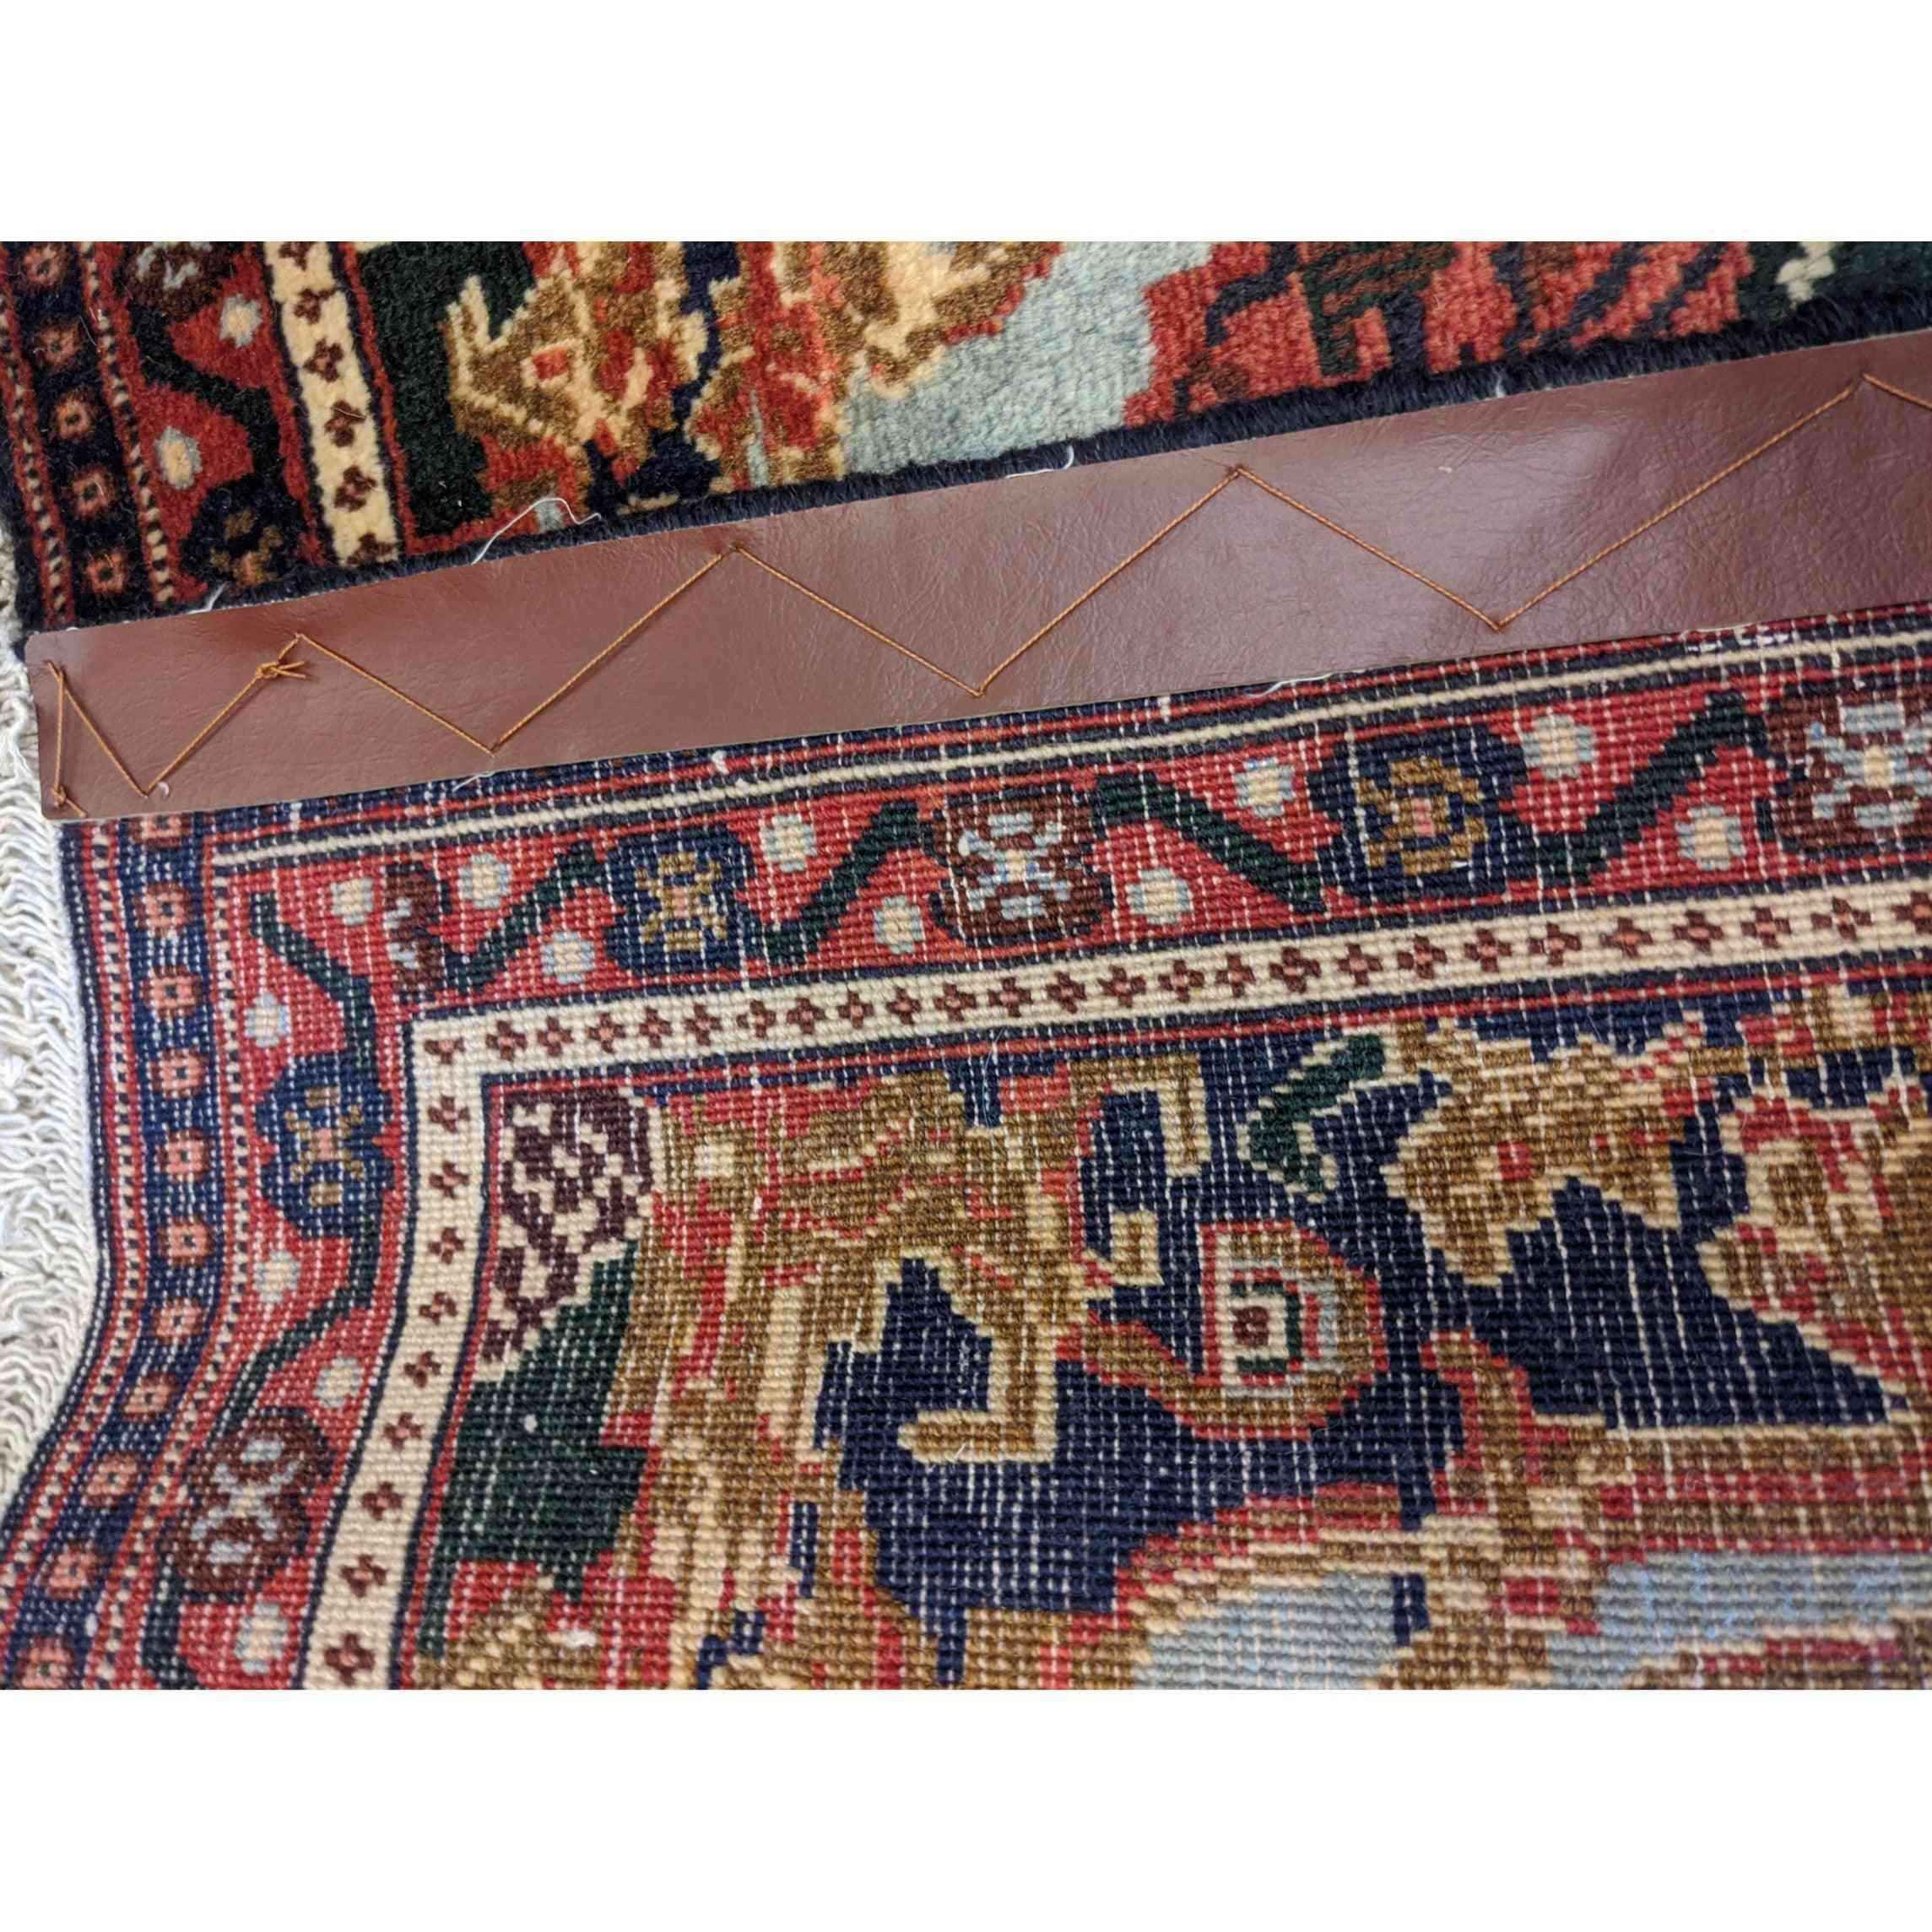 78 x 54 cm Persian senneh Traditional Magenta Small Rug - Rugmaster